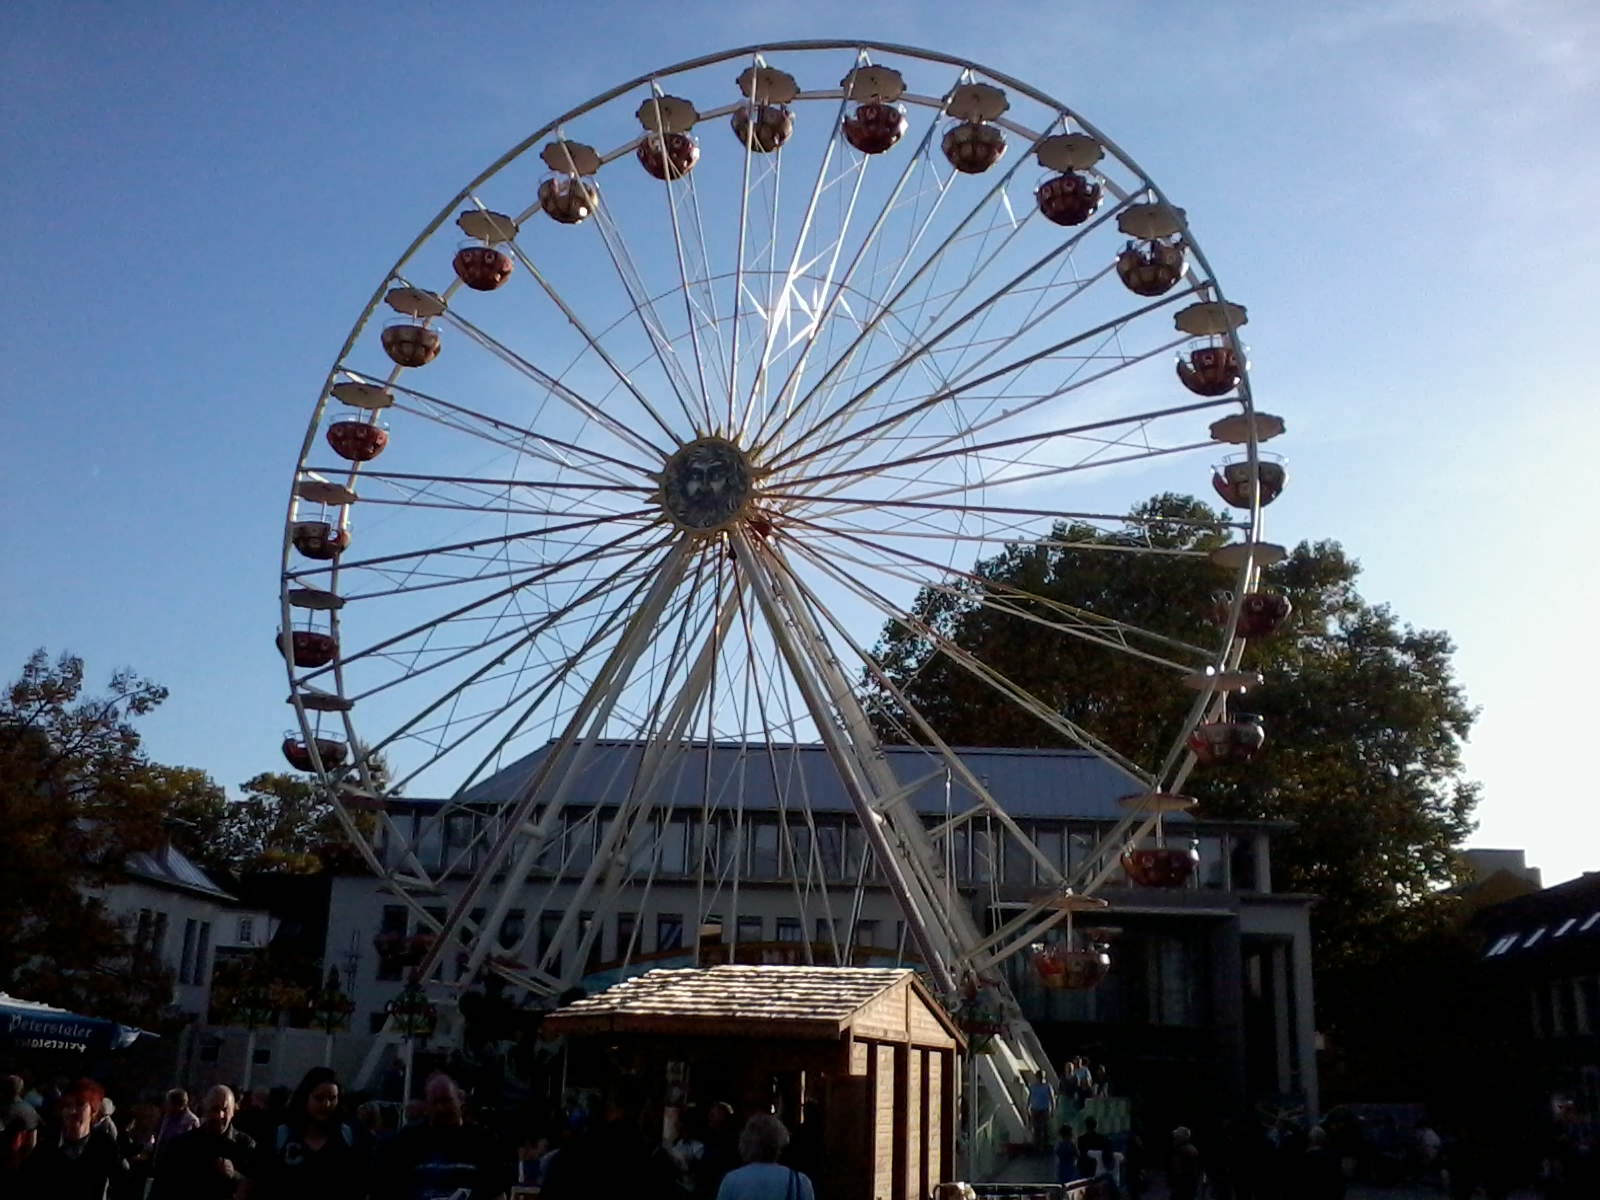 Ferris wheel, Attractions, Chrysanthemum, City, Ferris, HQ Photo